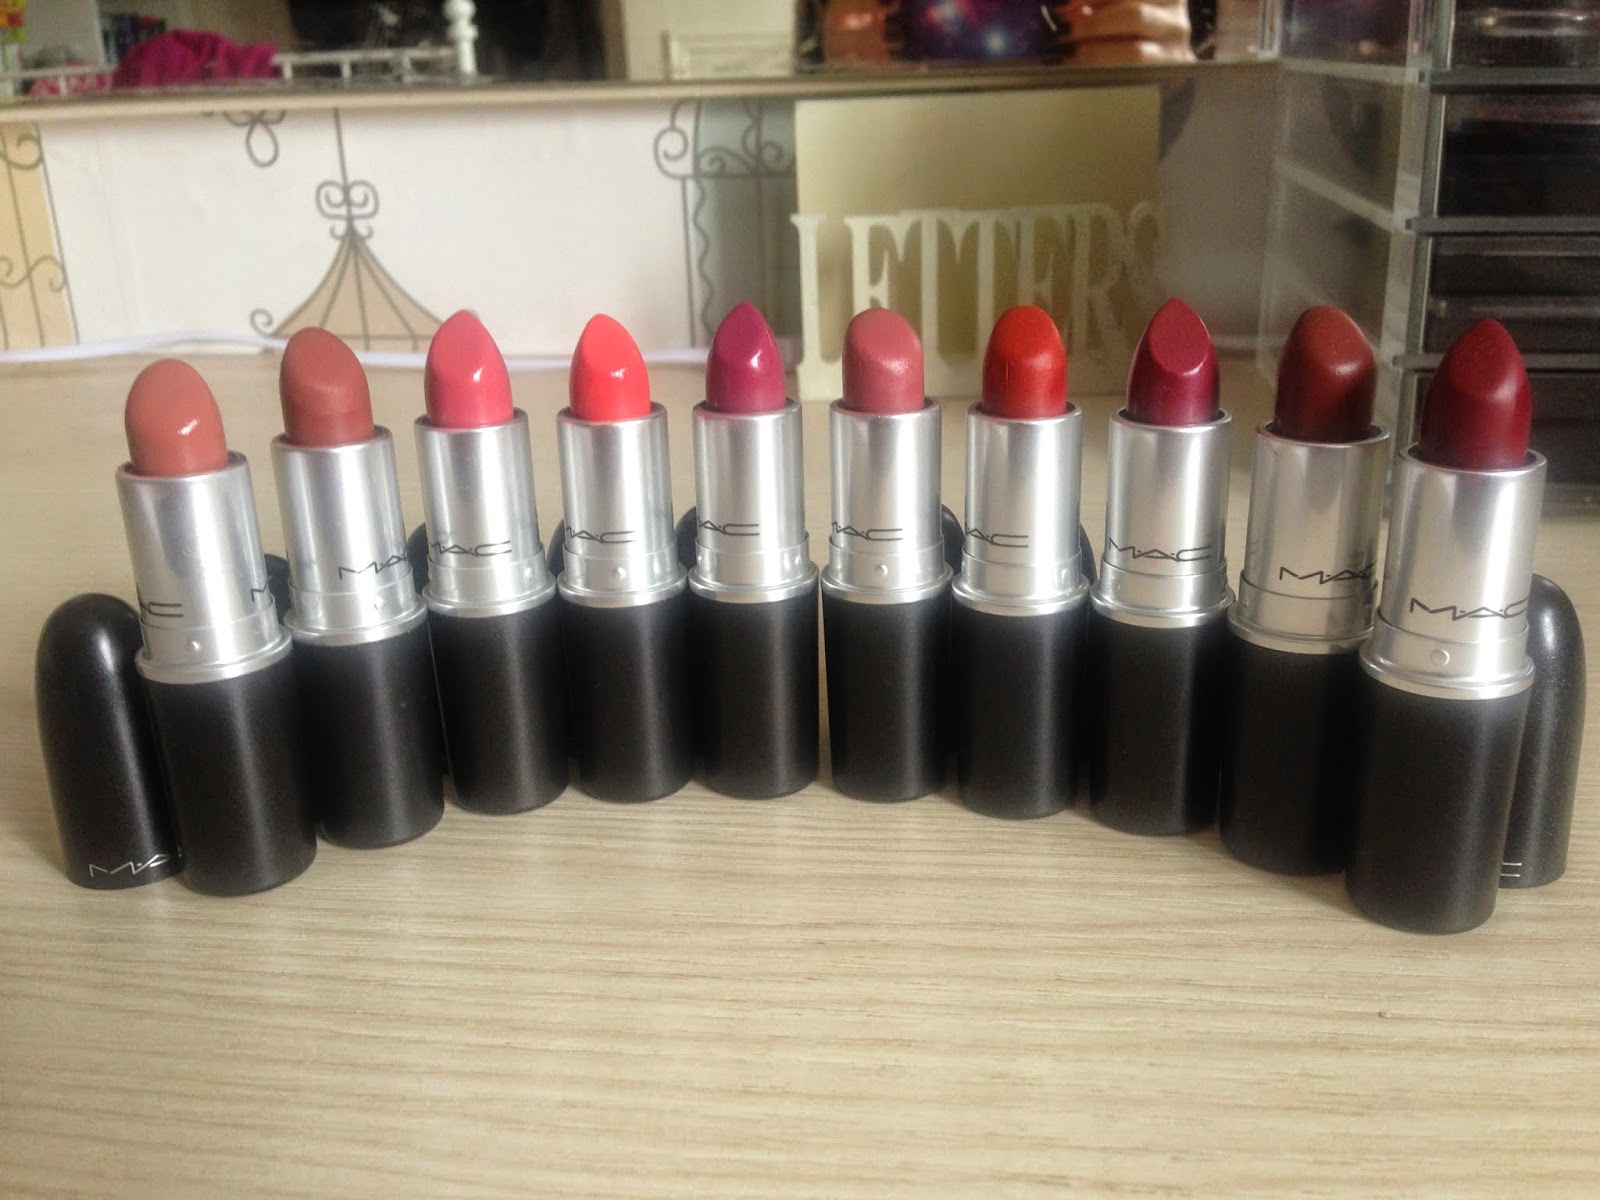 Makeup by Myrna - Beauty Blog: MAC lipstick review 